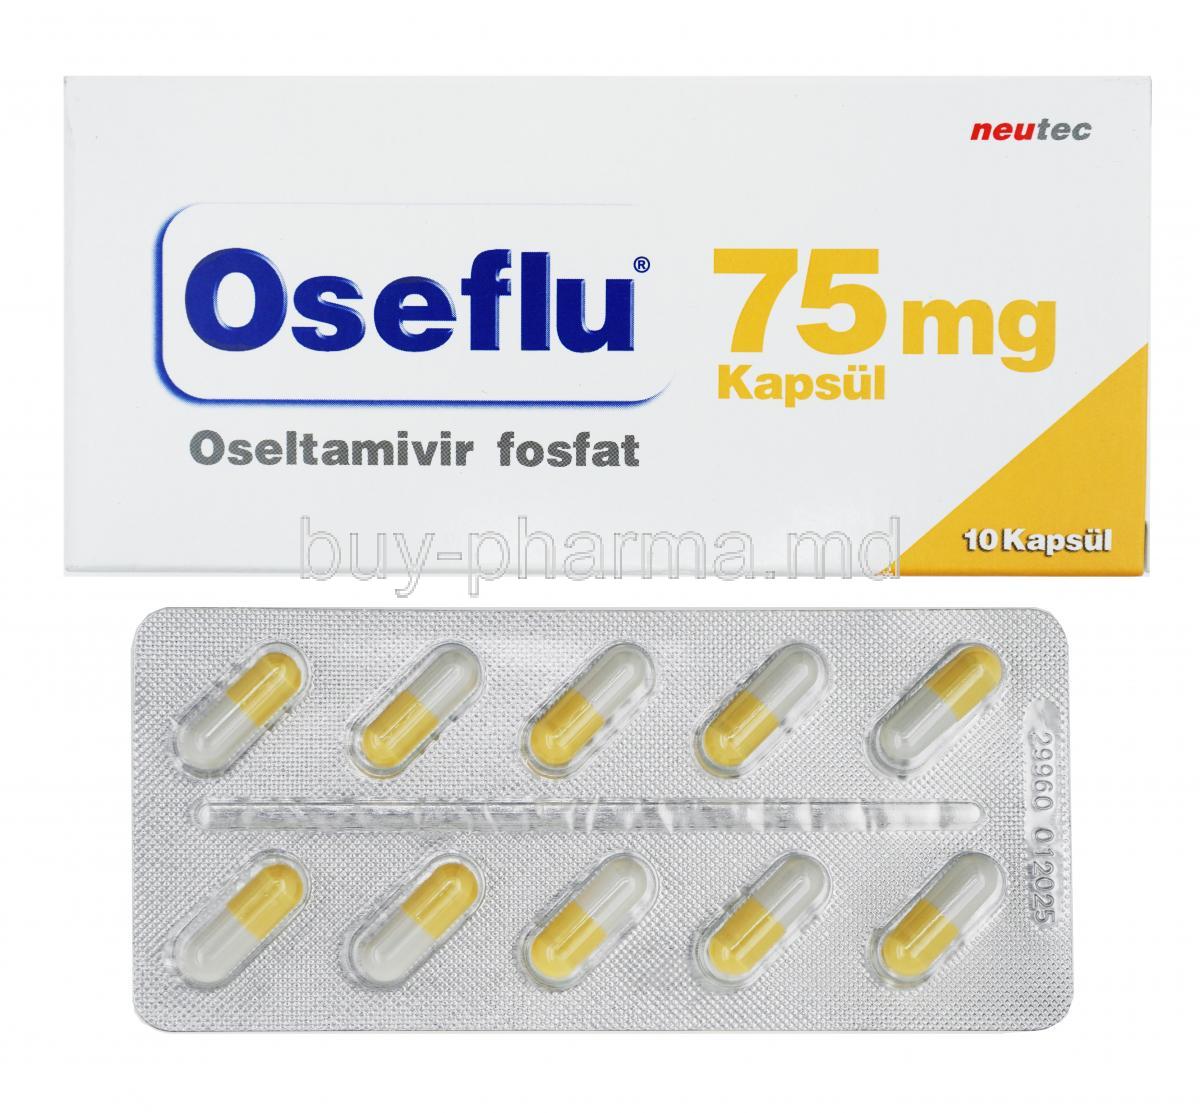 Oseflu Oseltamivir phosphate 75mg box and capsule